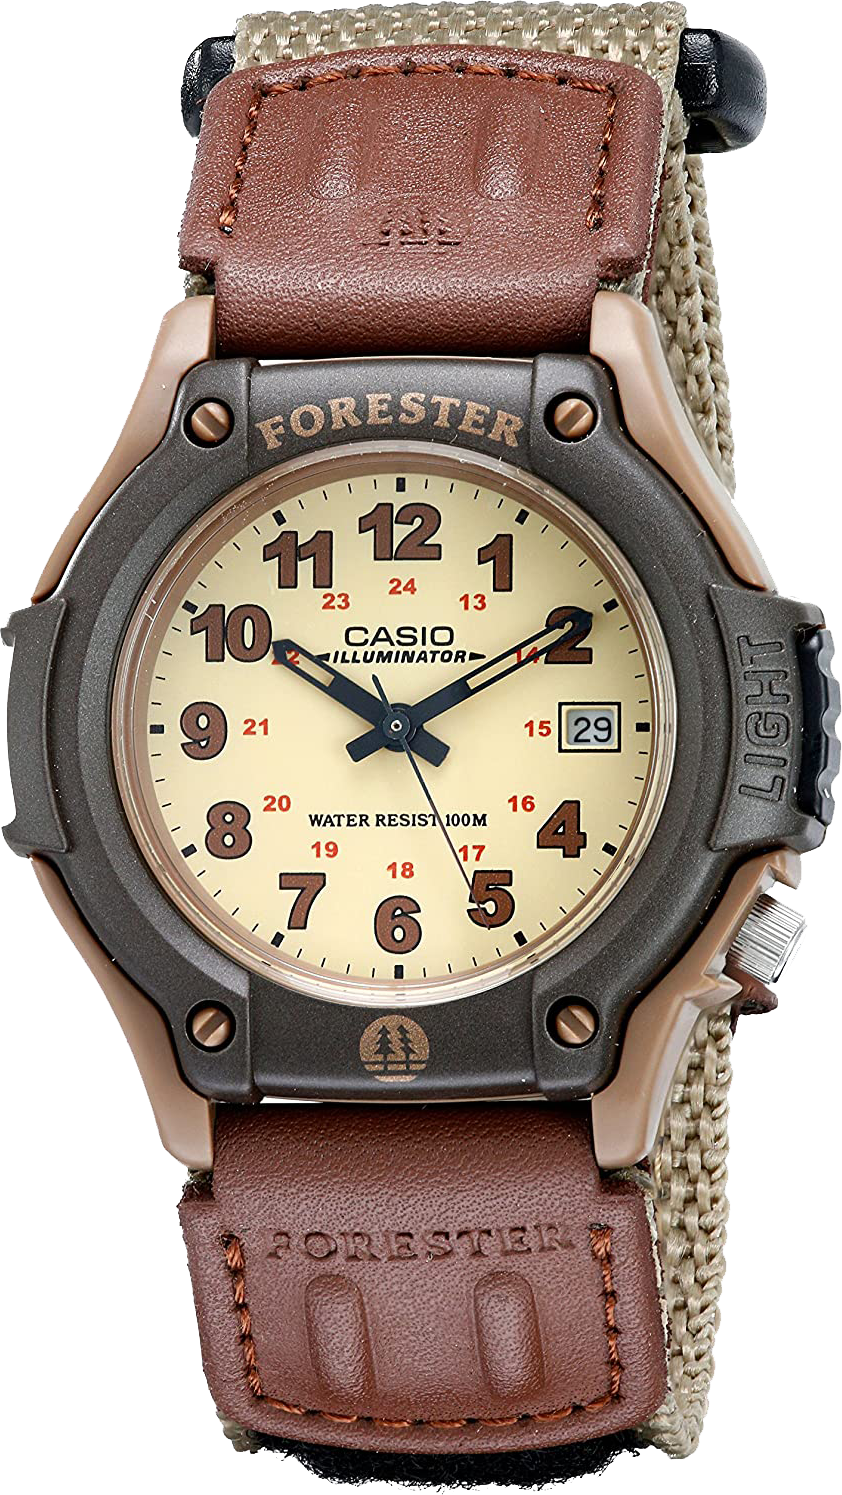 Casio Men's Forester Sport Watch FT-500WC-5BVCF